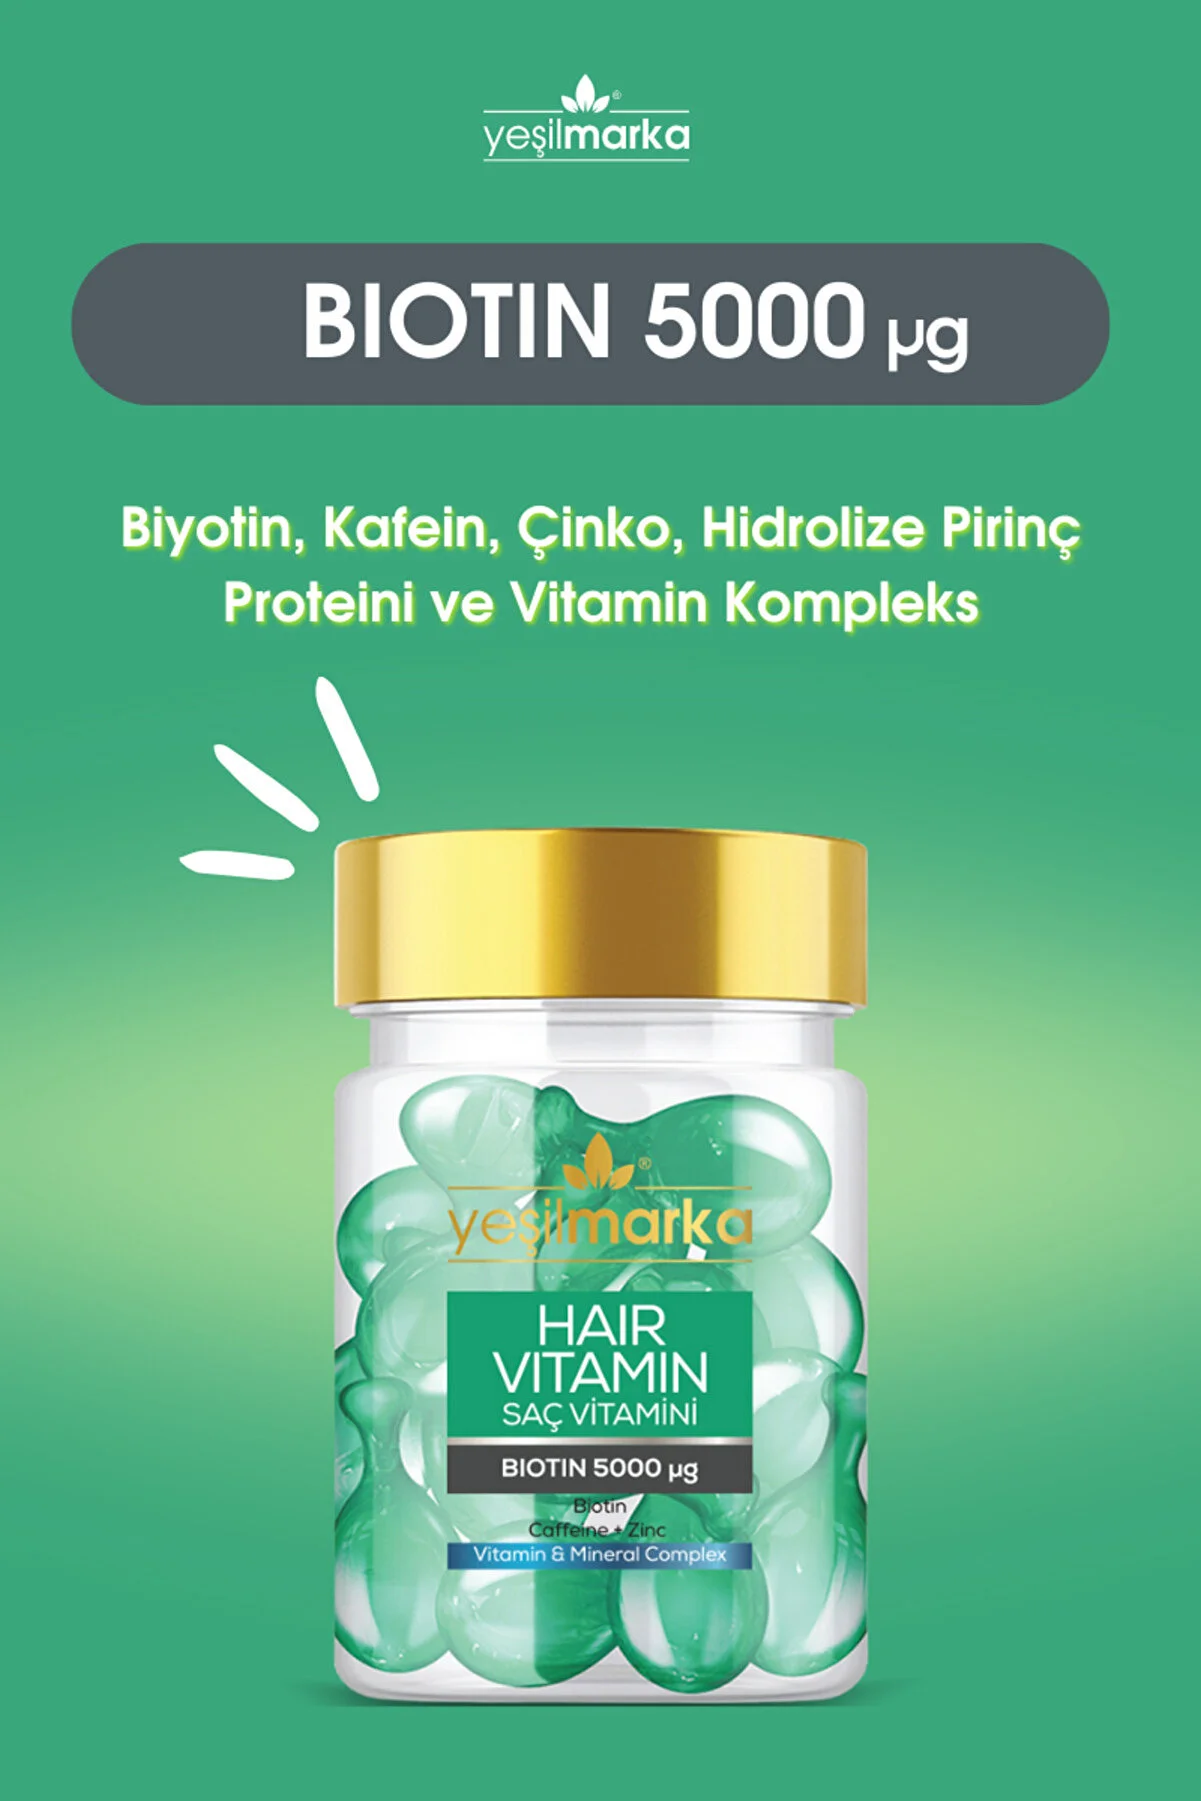 Yeşilmarka Saç Vitamini / Hair Vitamin - Biotin 5000